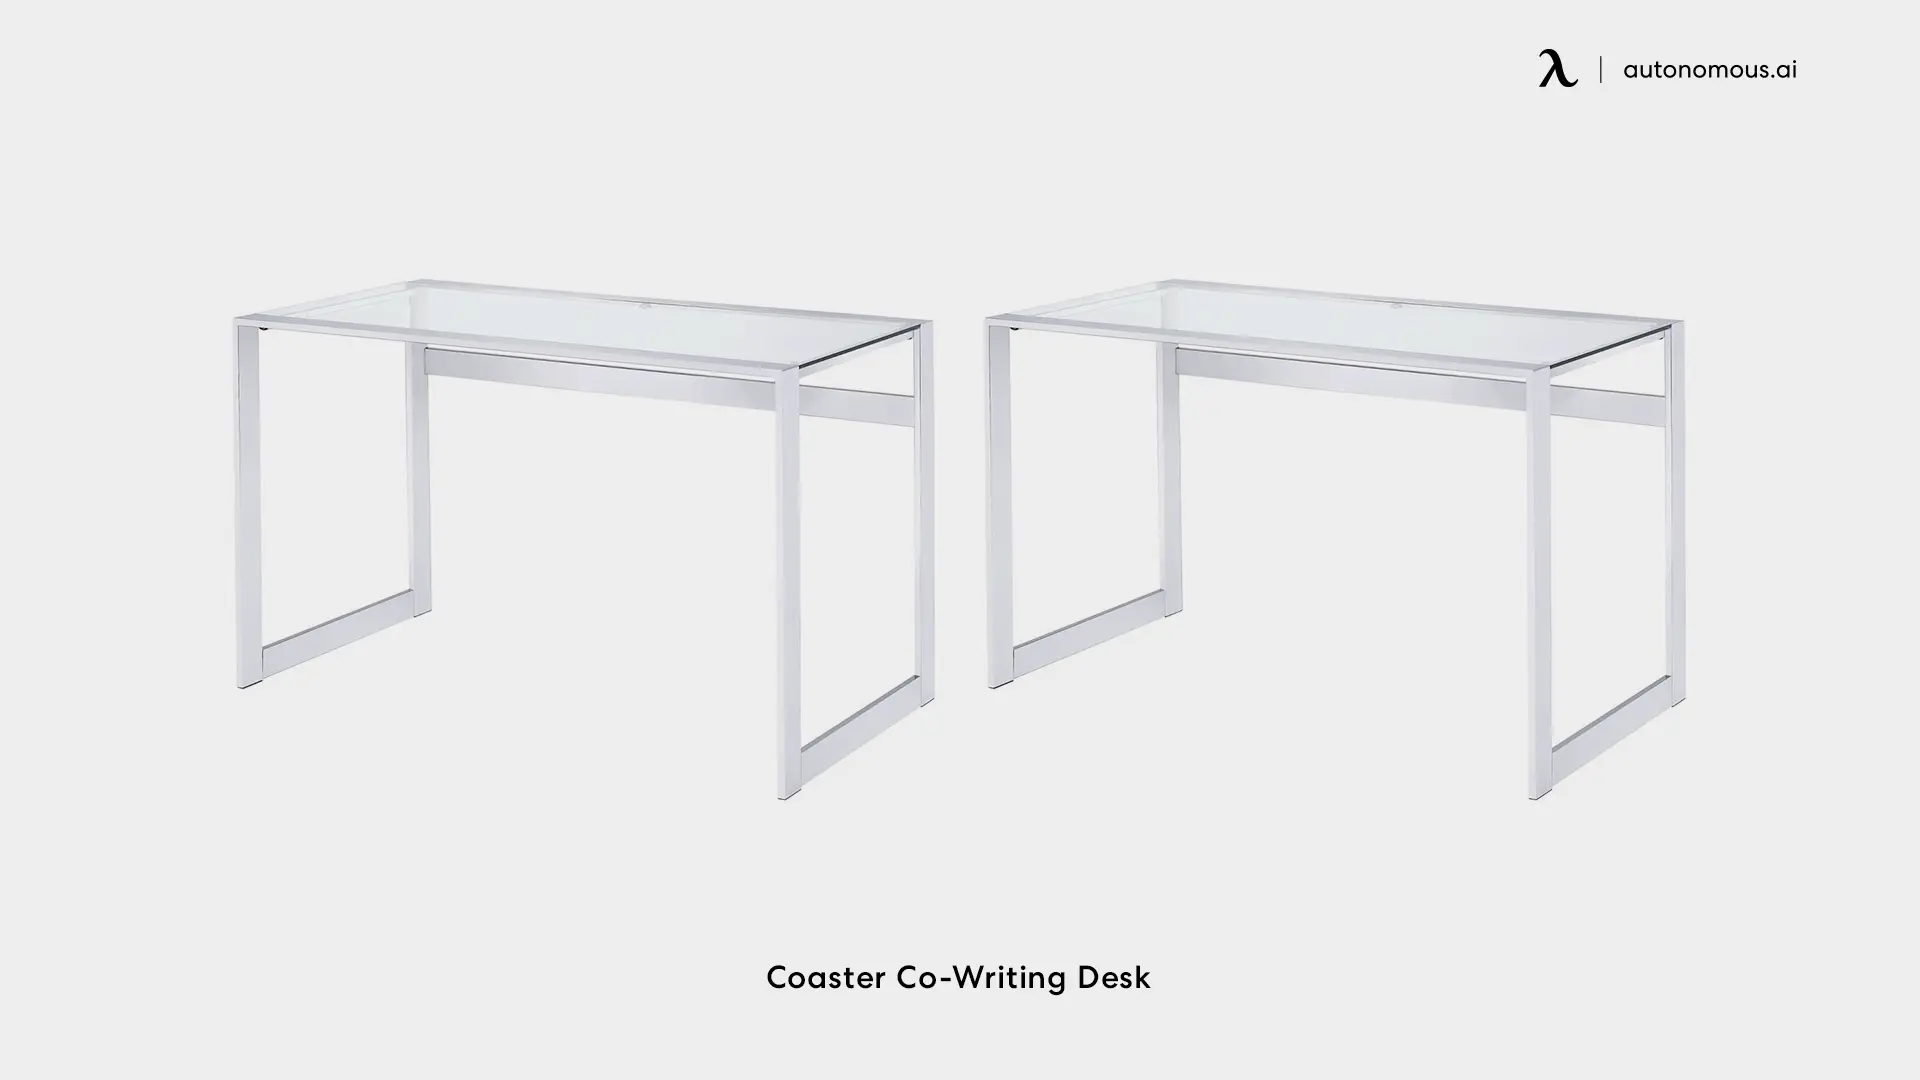 Coaster Co-Writing Desk